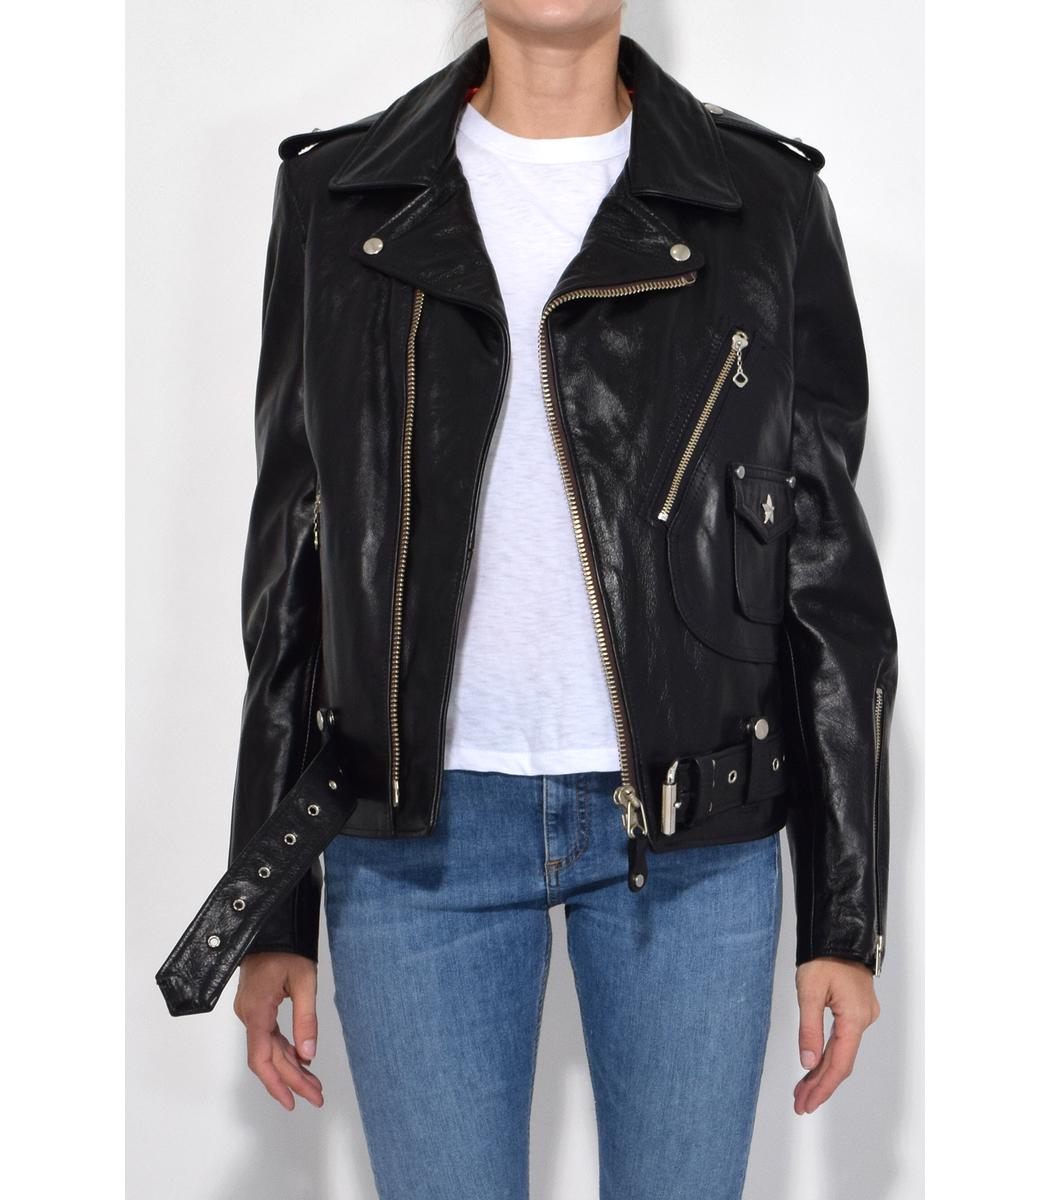 Lyst - Rag & Bone Black Schott Leather Jacket in Black